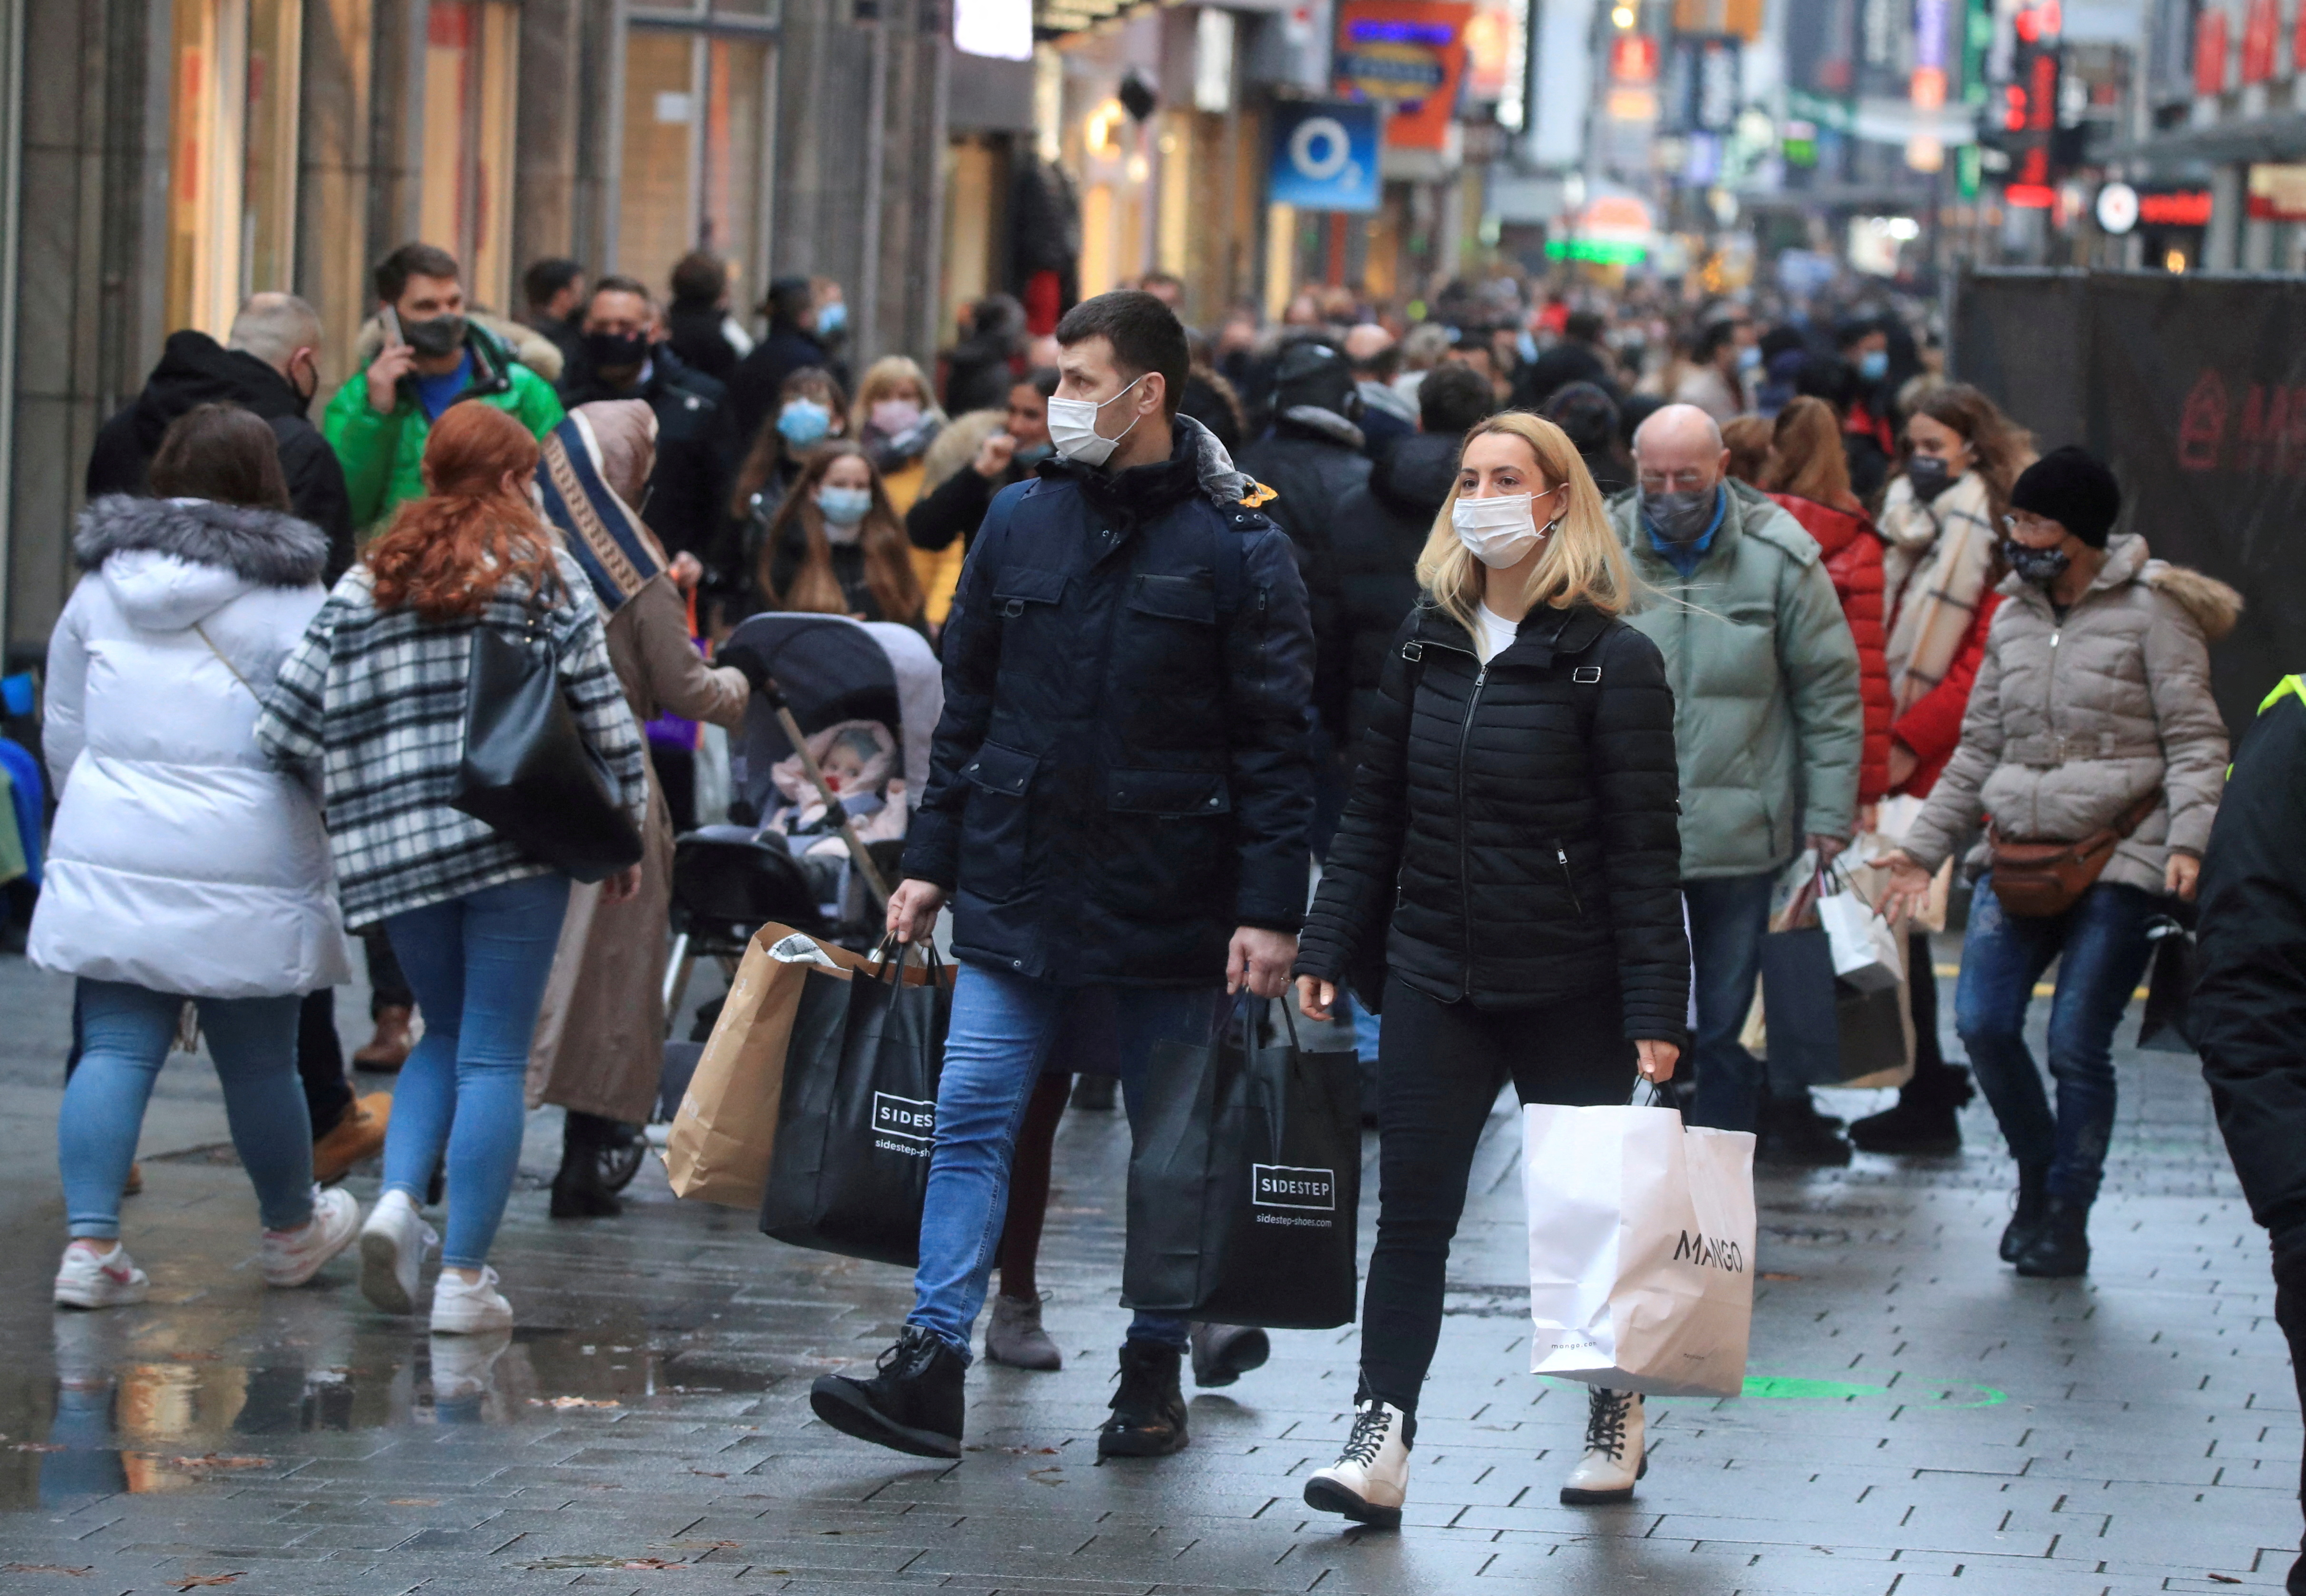 UKFILE PHOTO: Cologne's shopping street during the coronavirus pandemic